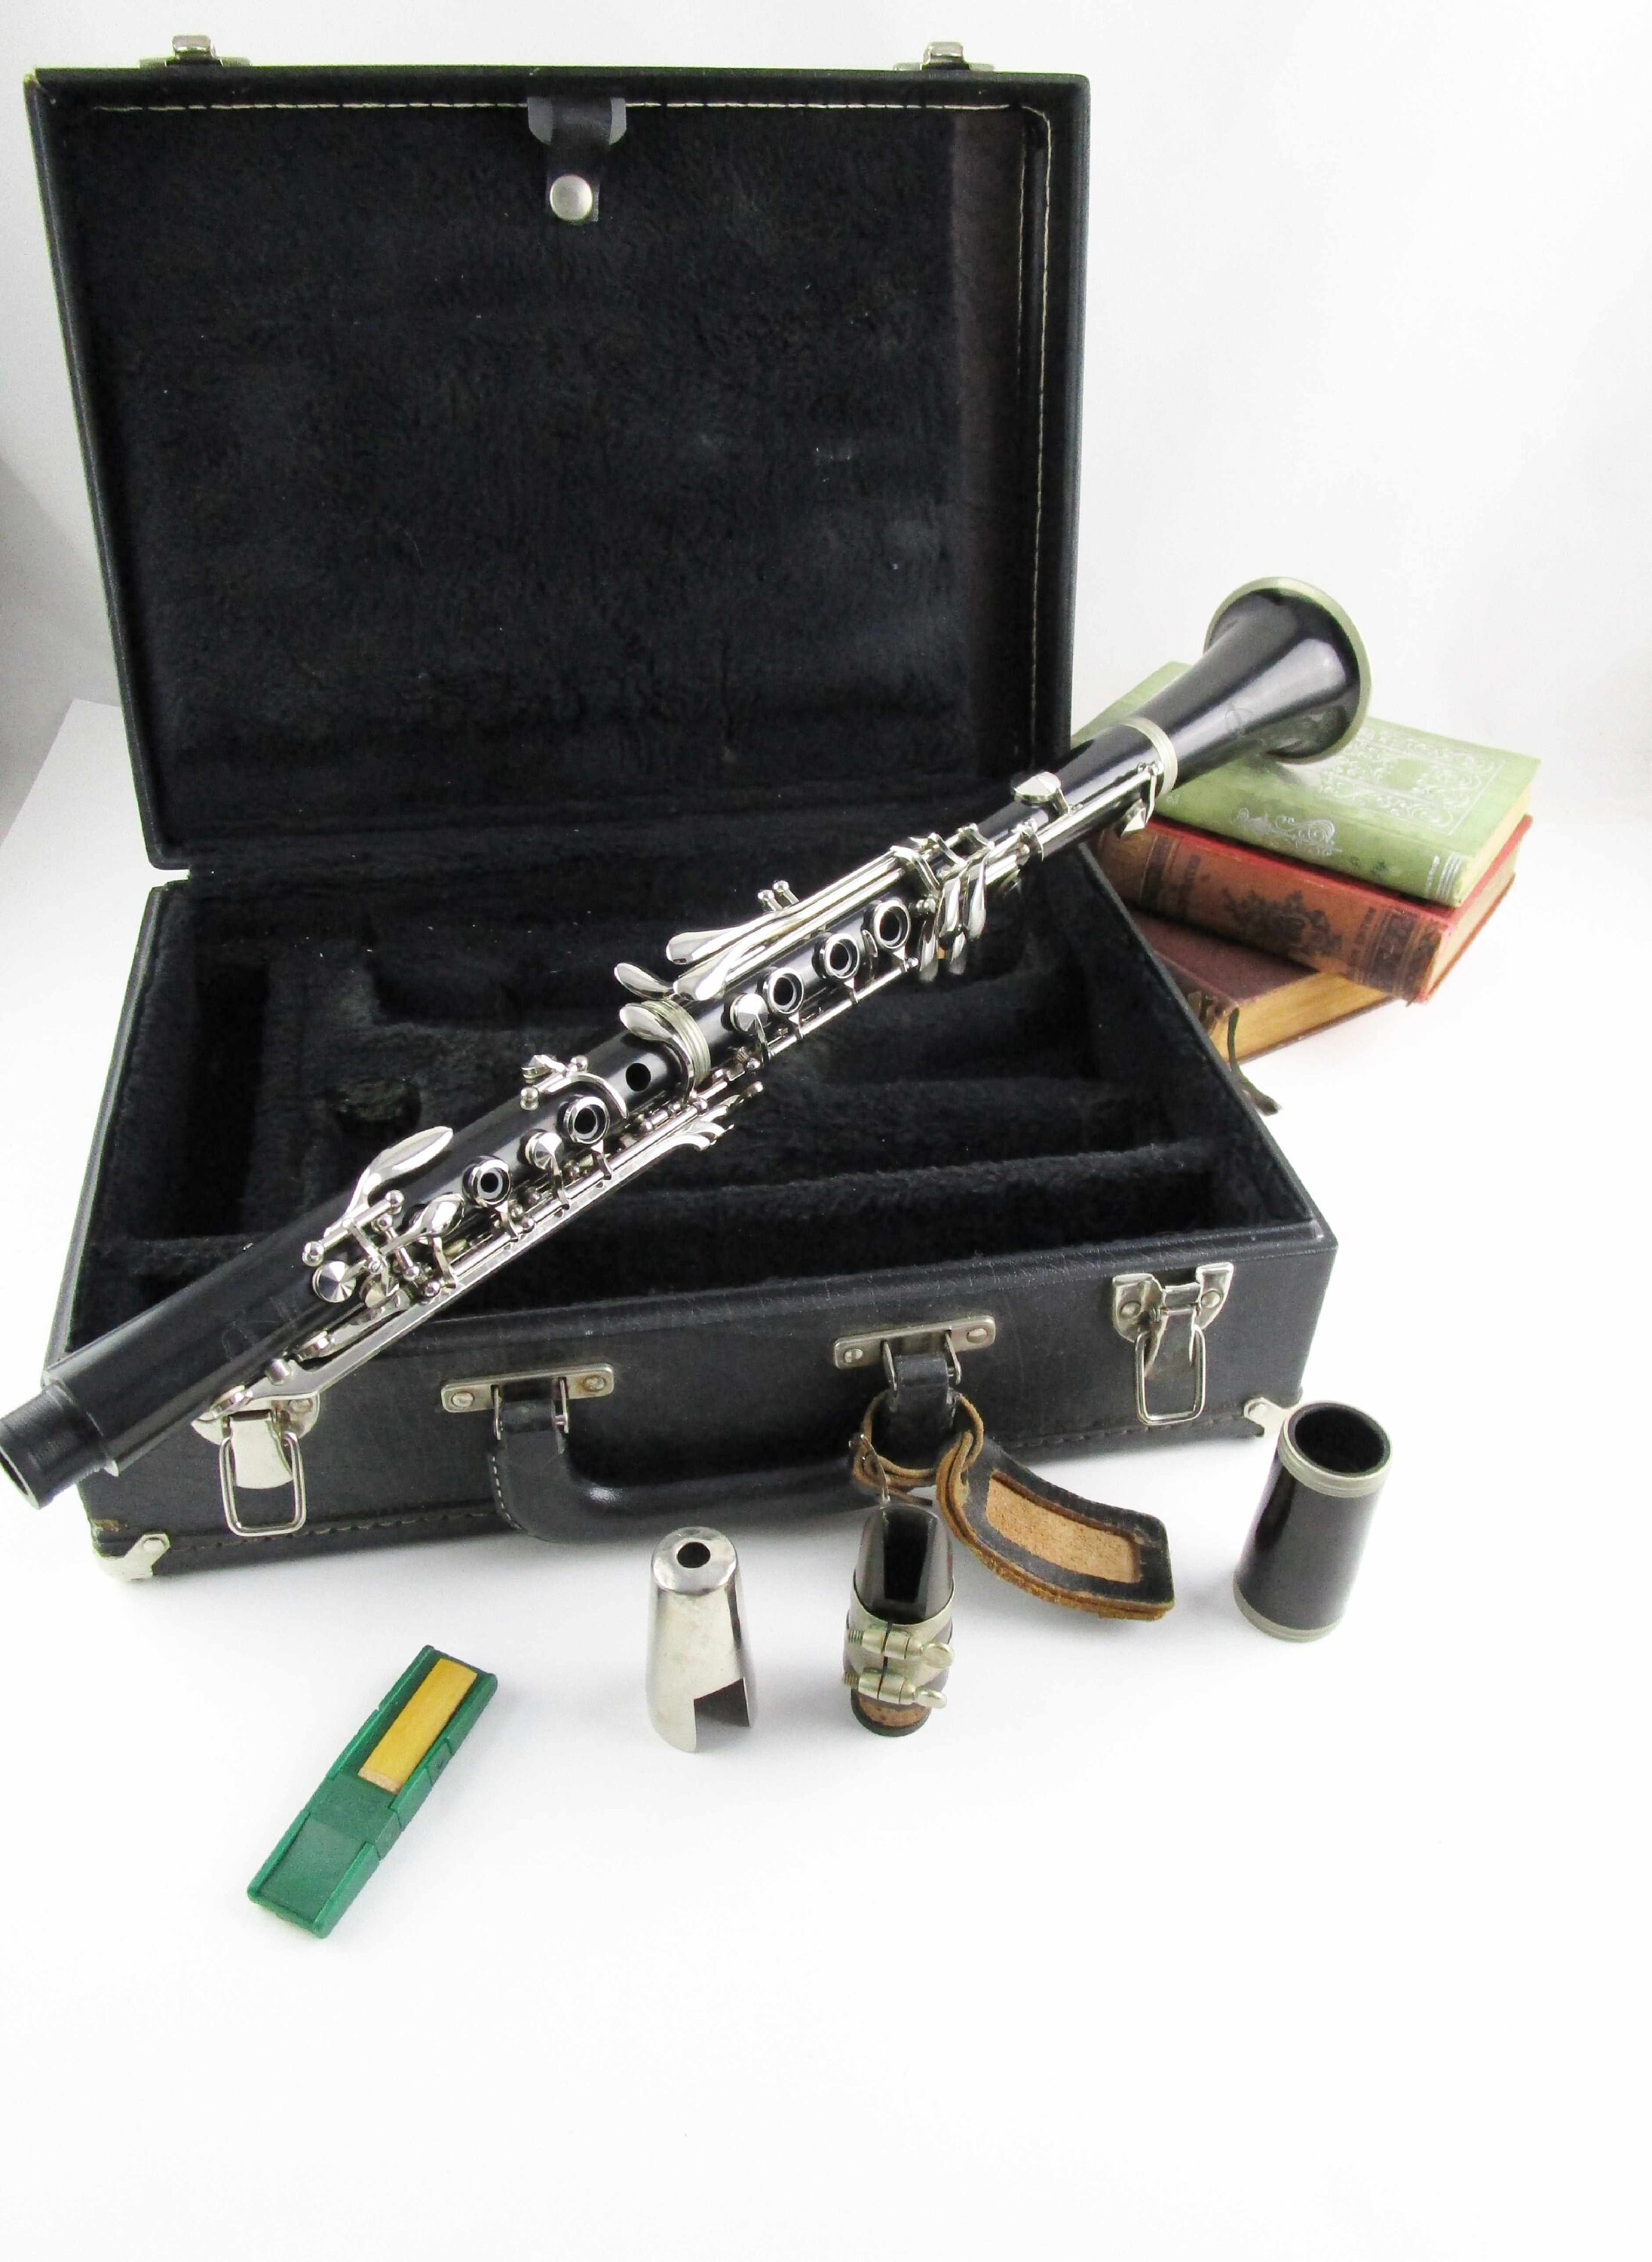 A 'Normandy Reso-tone' Clarinet in Vintage Black Case | Etsy